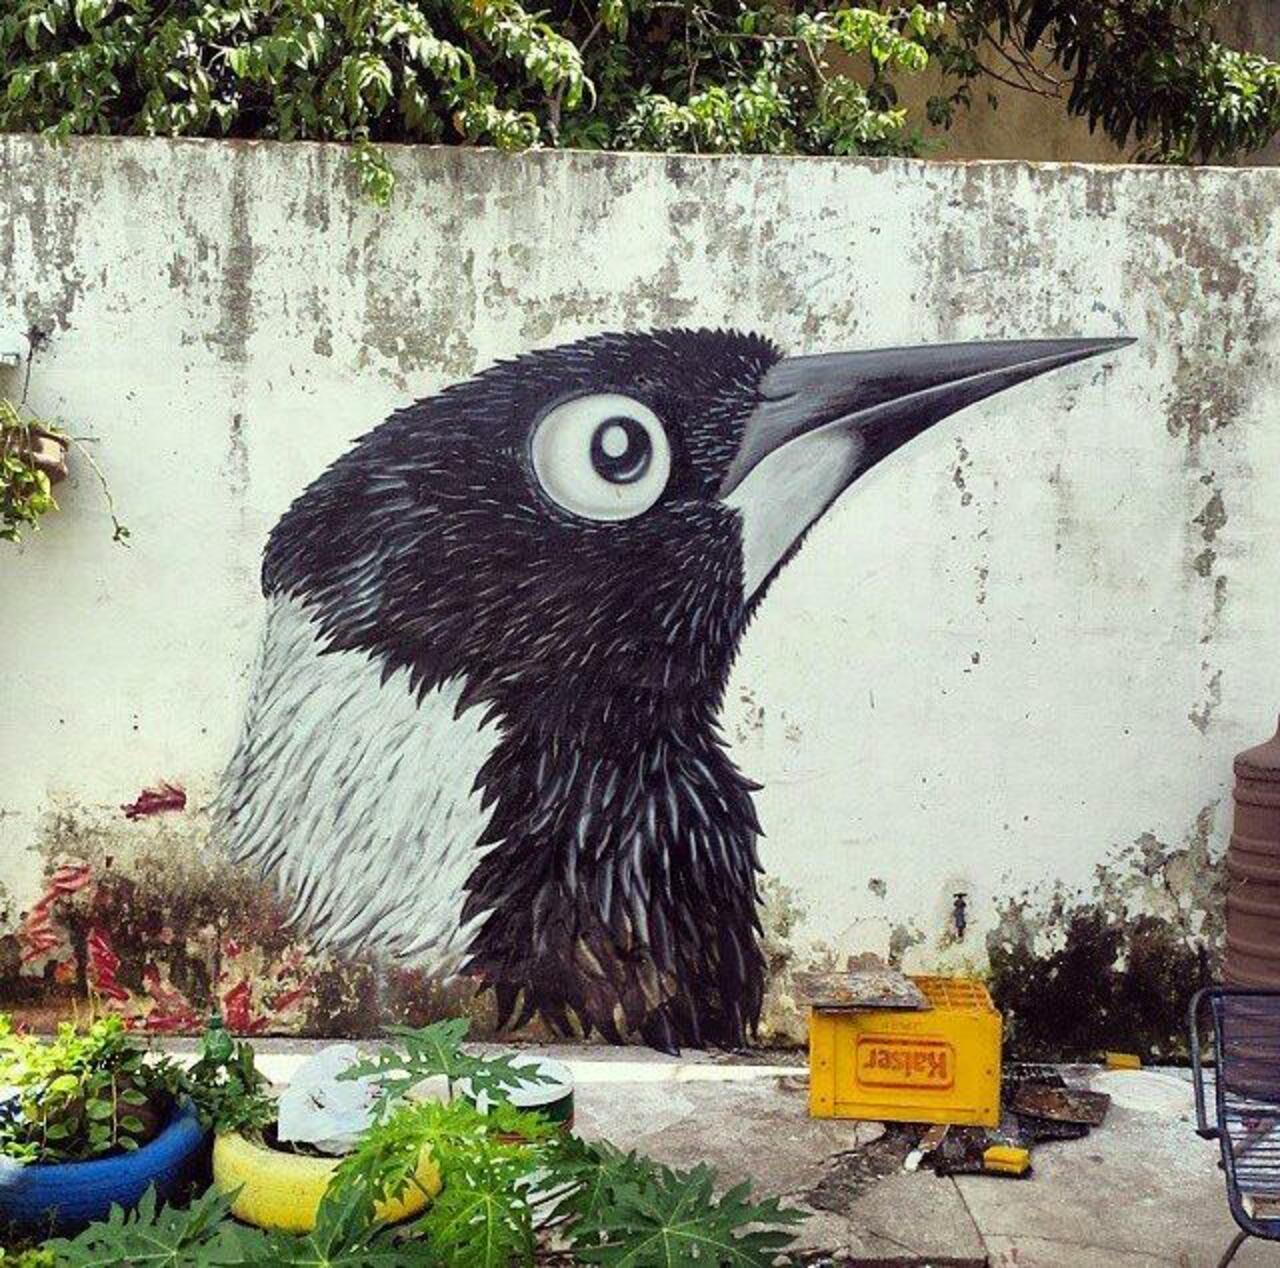 Street Art by EcoBirds in Brazil 

#art #arte #graffiti #streetart http://t.co/N89qoPbP0J